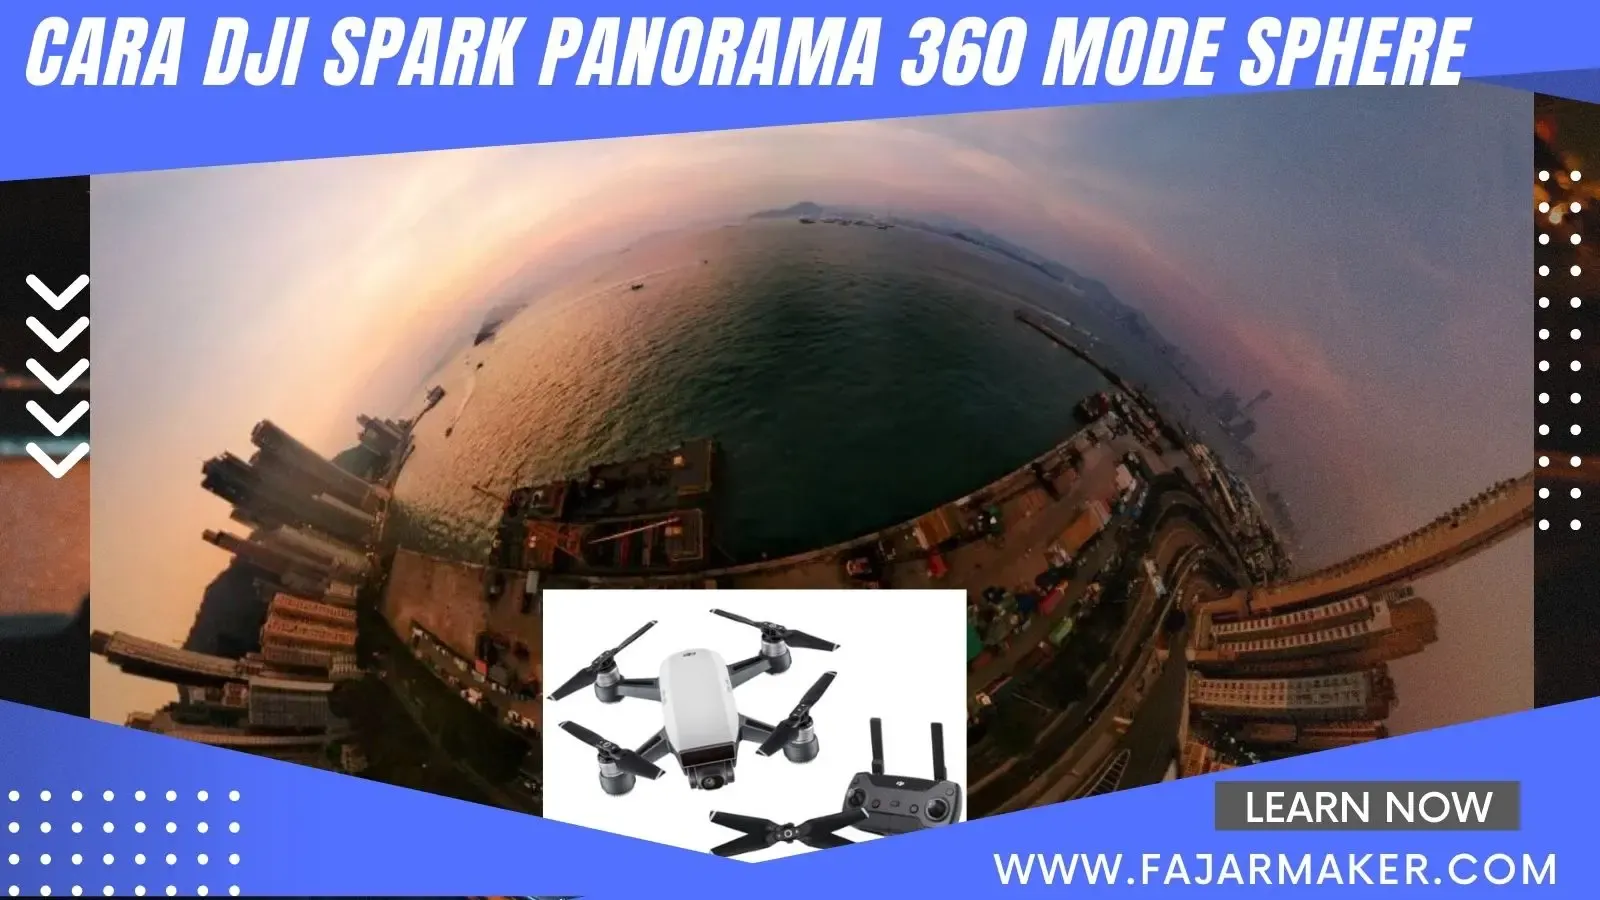 Cara Dji spark panorama 360 mode sphere